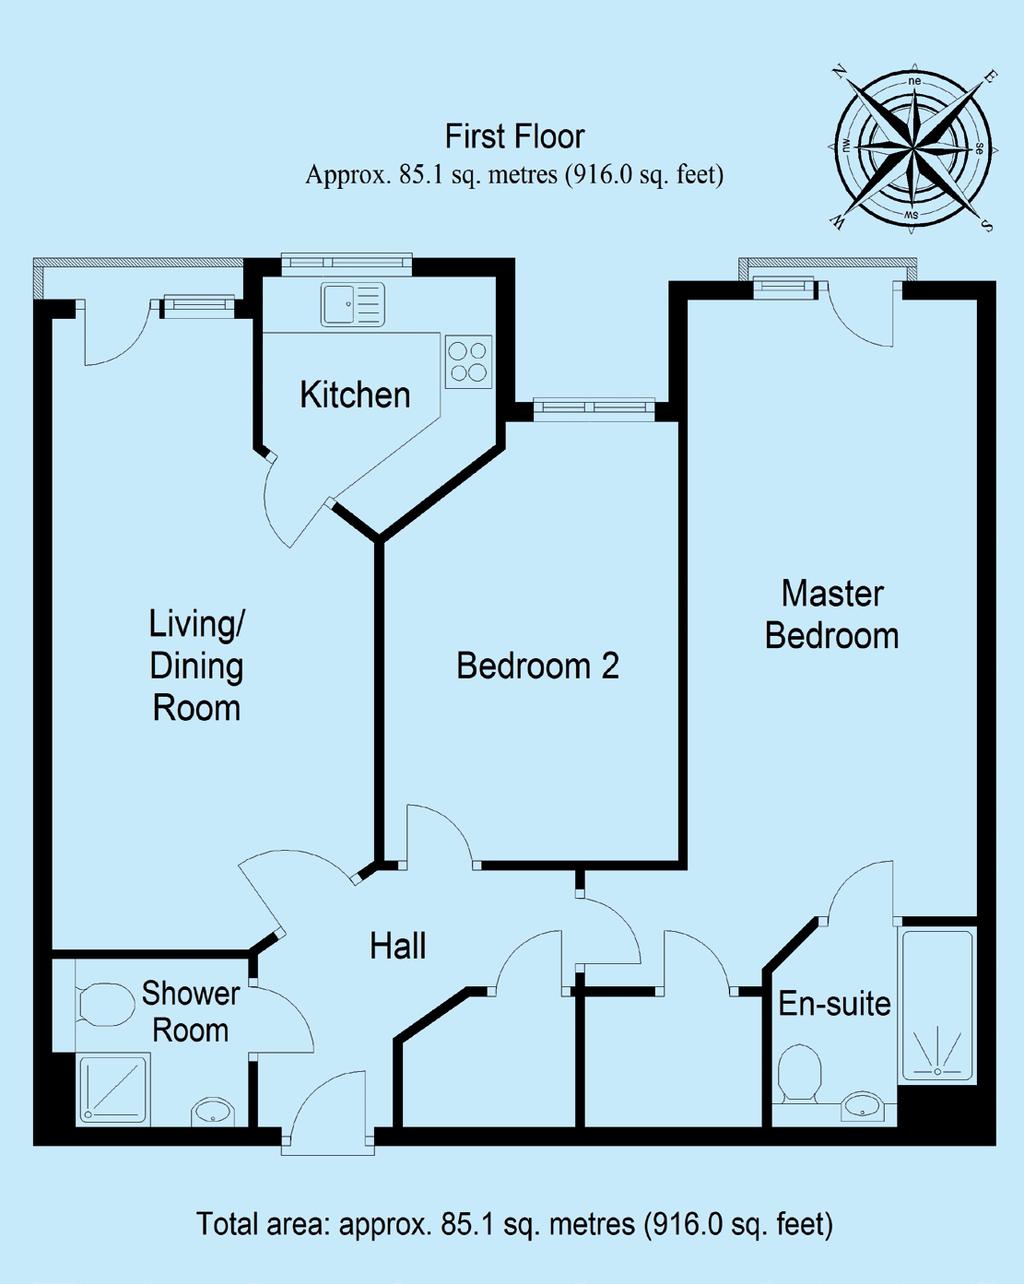 Approximate Dimensions Living/Dining Room 6.86m (22 6 ) x 3.45m (11 4 ) Kitchen 2.75m (9 0 ) x 2.34m (7 8 ) Master Bedroom 7.32m (24 0 ) x 3.08m (10 1 ) En-suite 2.21m (7 3 ) x 2.